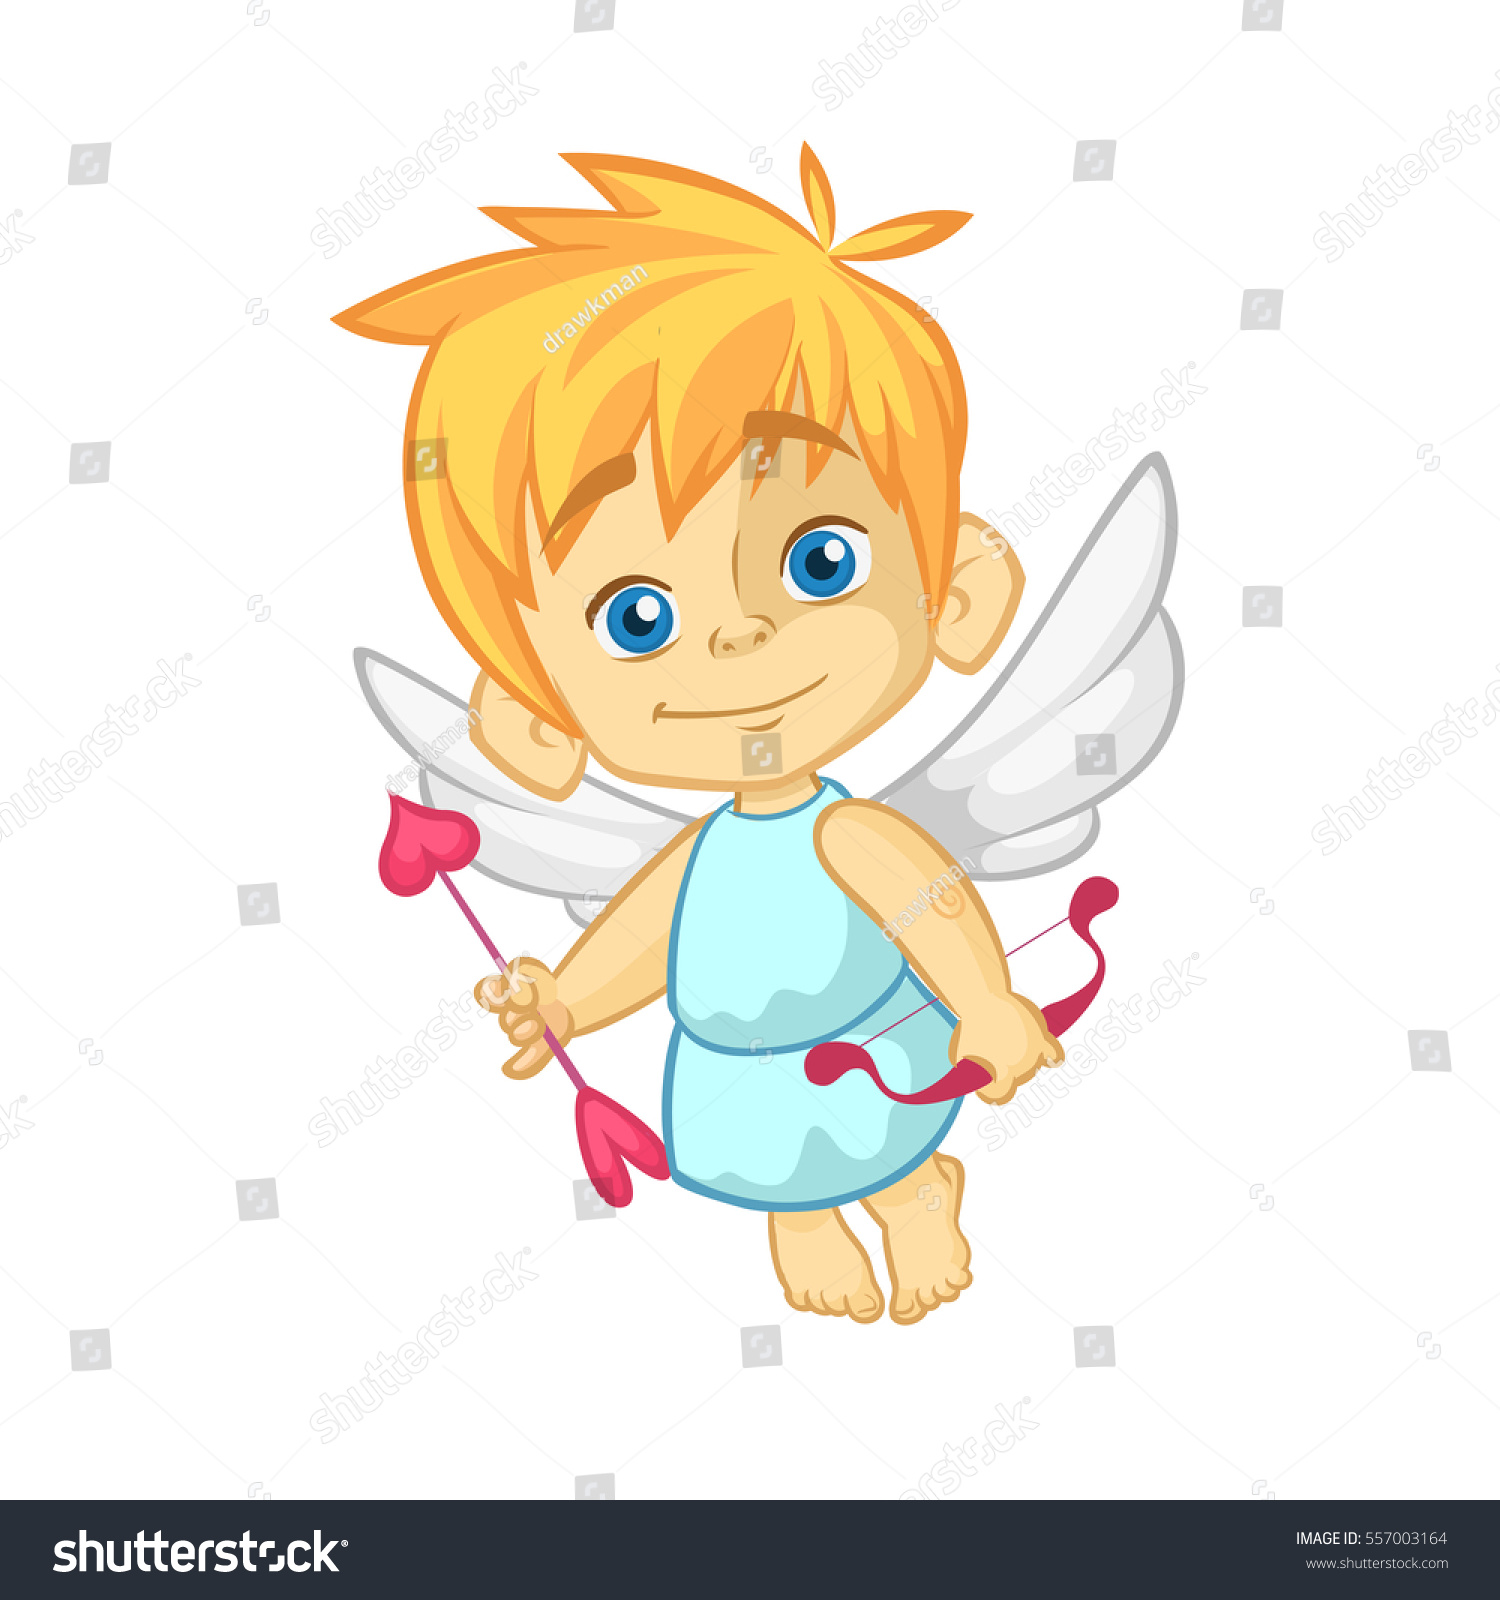 Funny Cupid Cartoon Character Bow Arrow Stock Vector 557003164 - Shutterstock